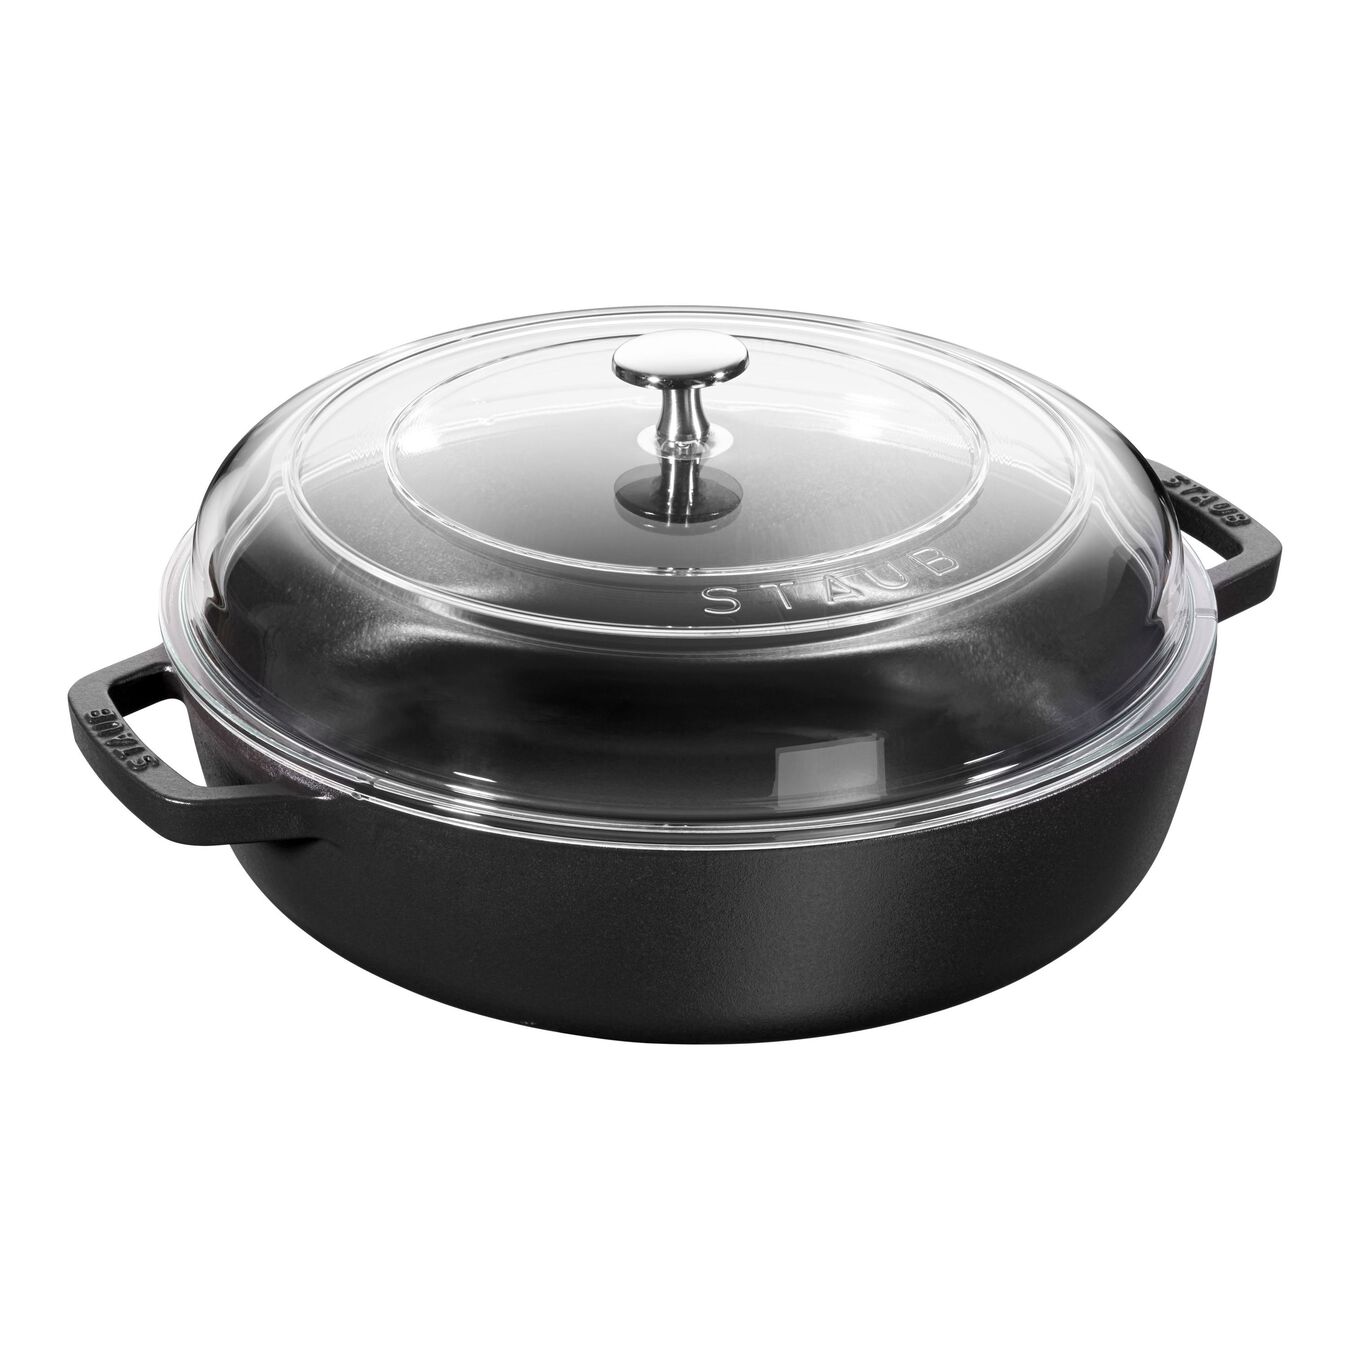 3.7 l cast iron round Saute pan with glass lid, black,,large 1